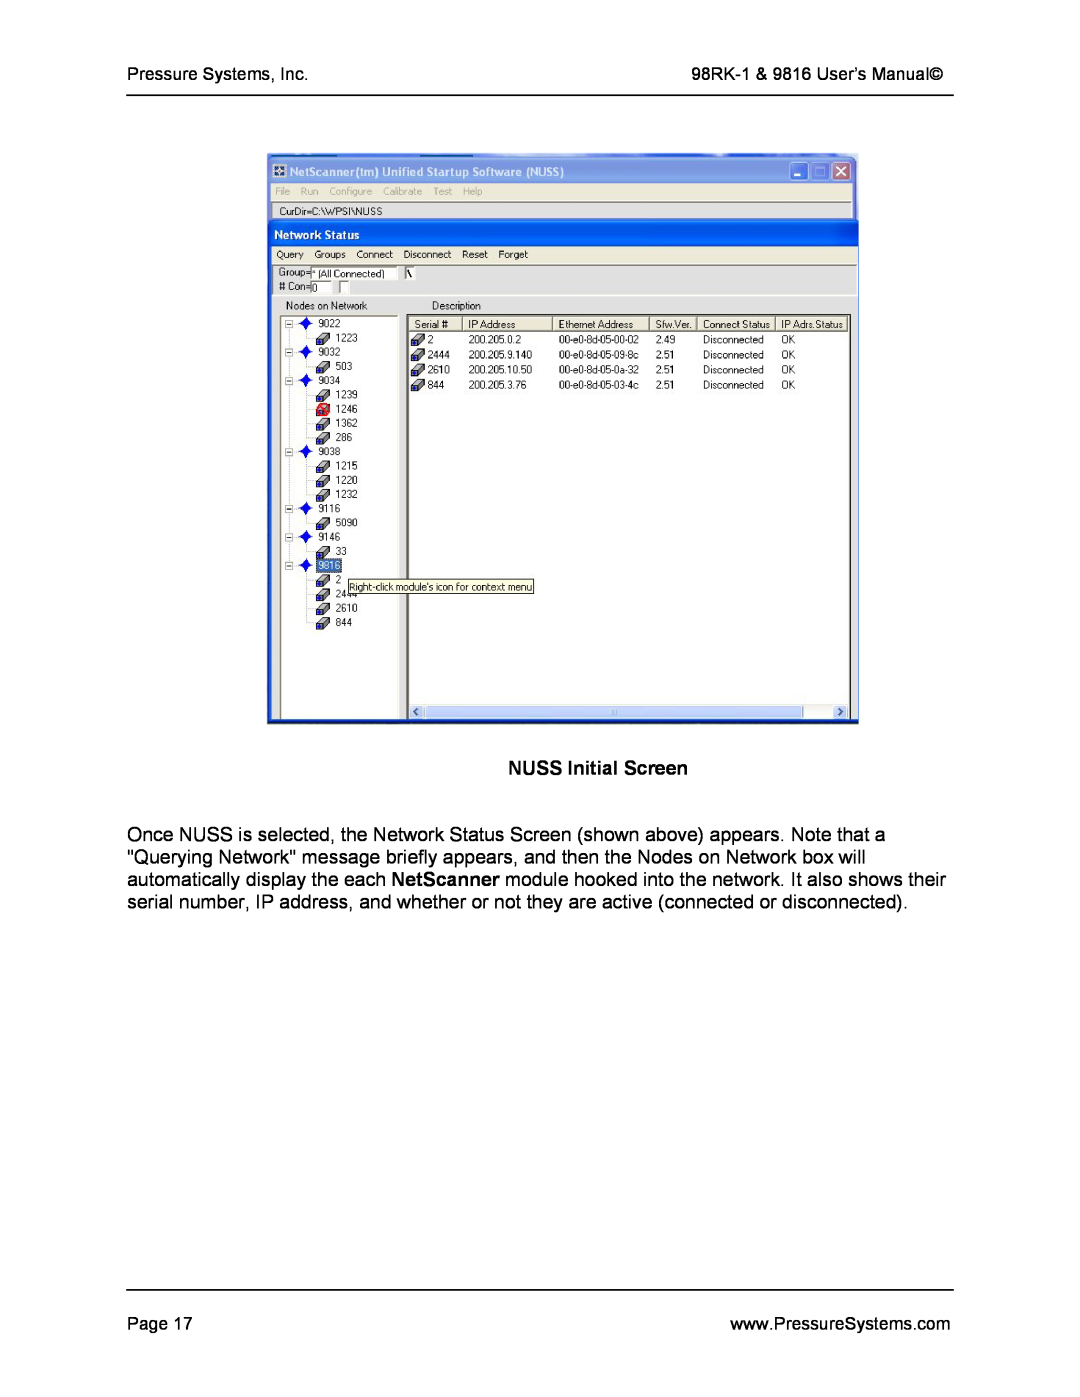 Pressure Systems 98RK-1 user manual NUSS Initial Screen 